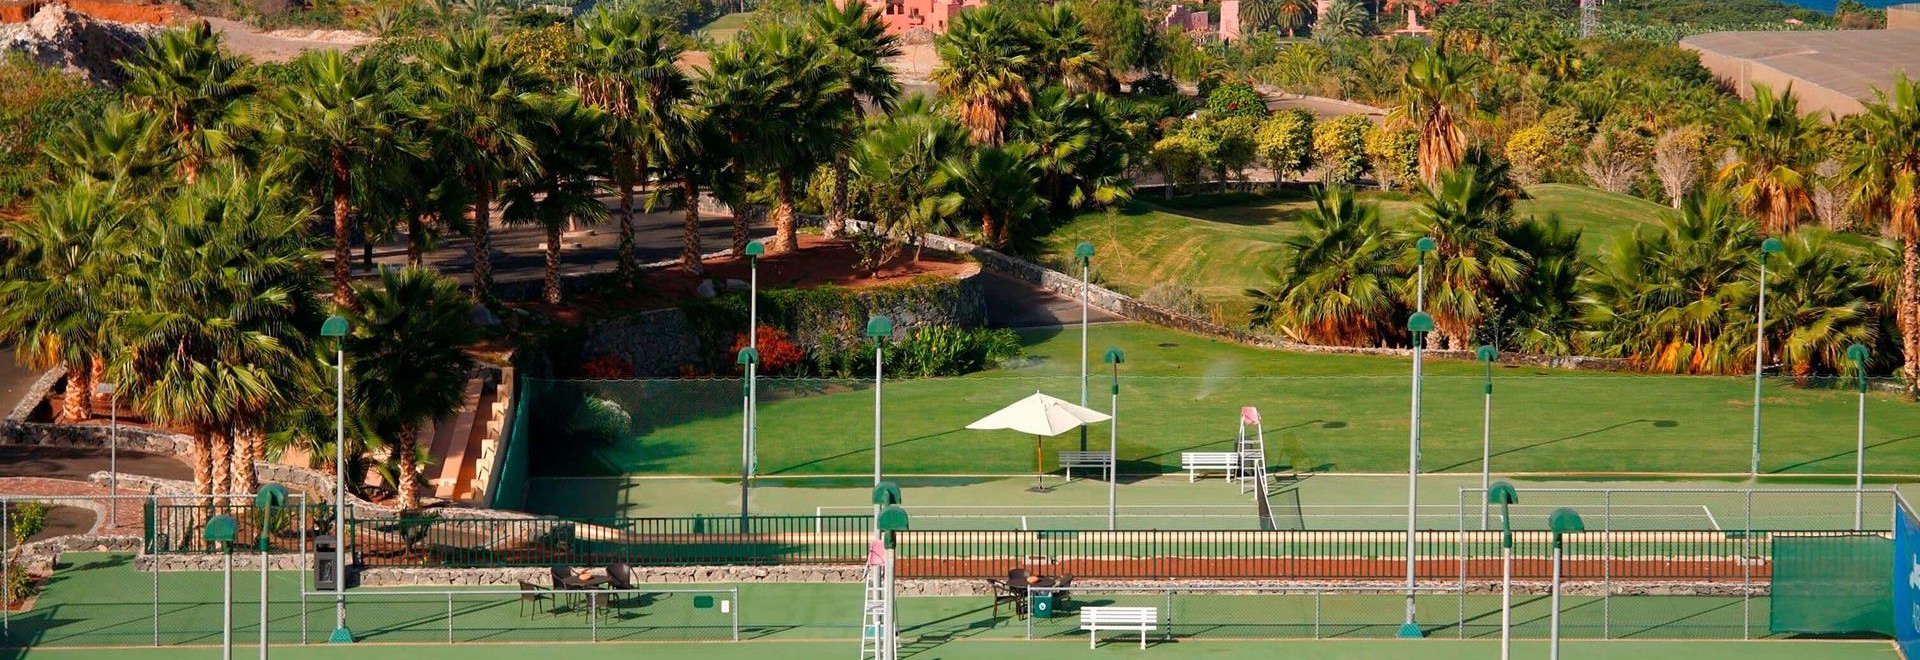 Tenerife Tennis Academy, Spain  - Book. Travel. Play.